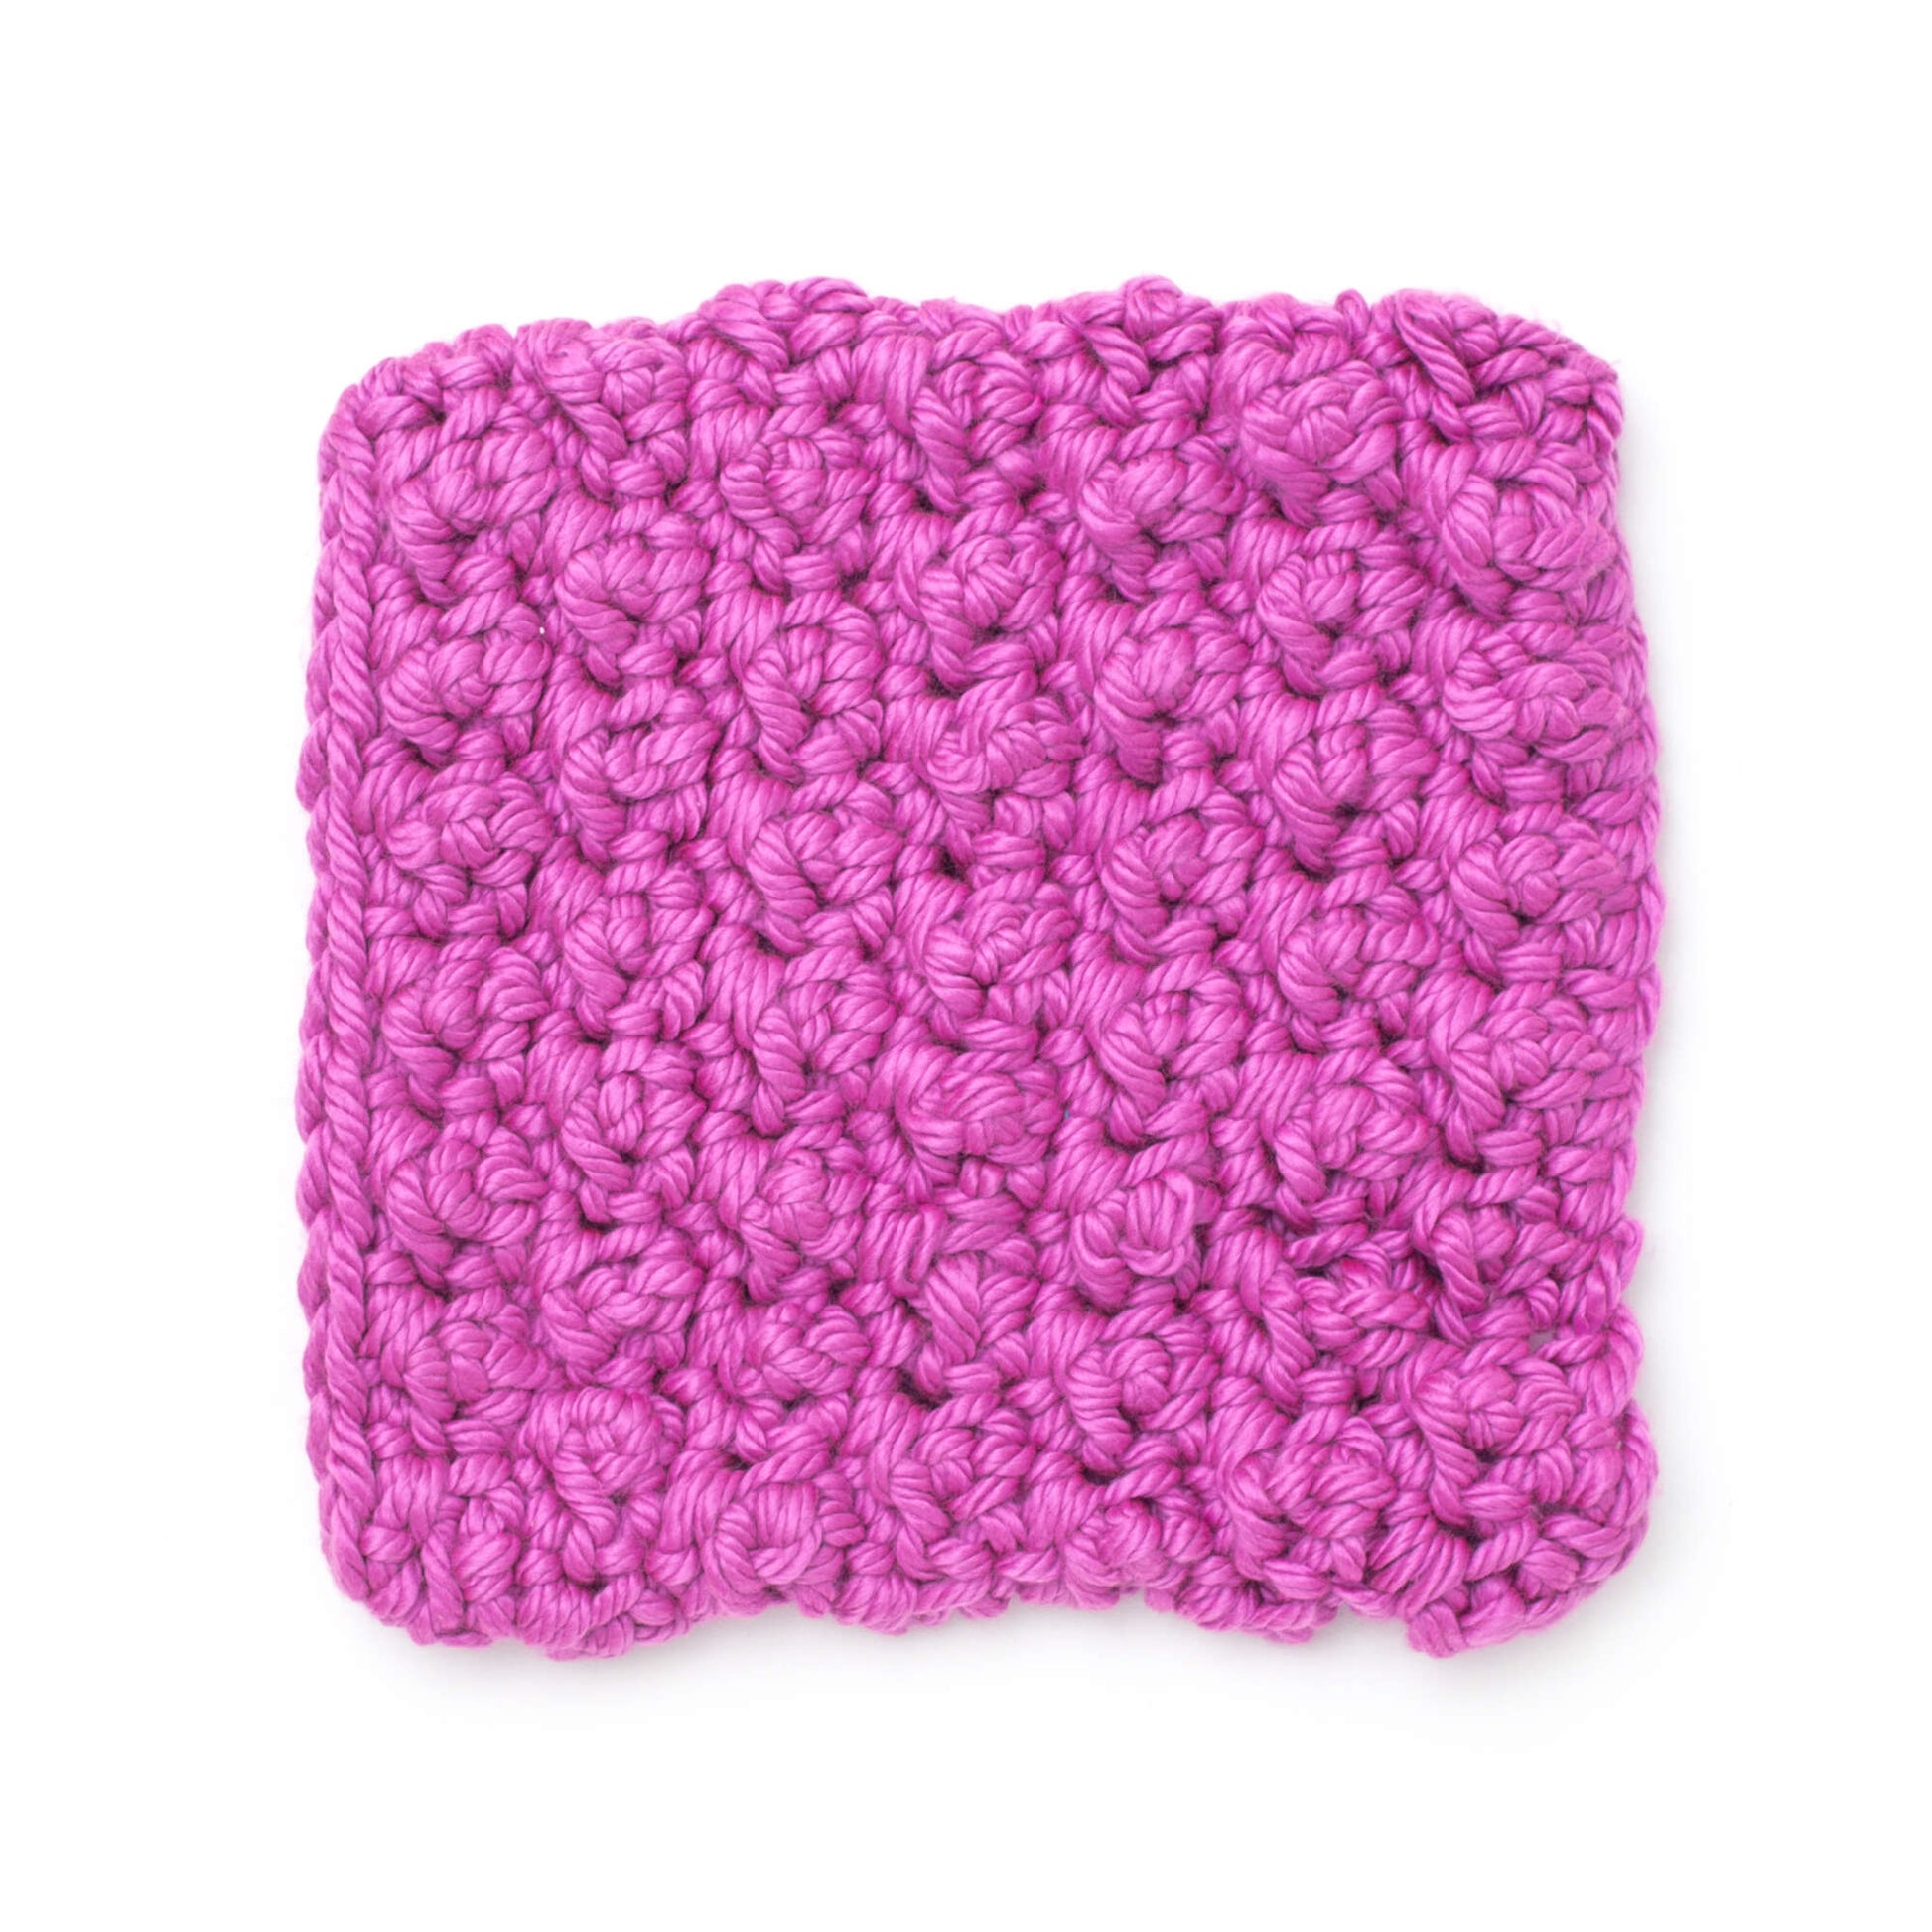 Free Bernat Gutsy Textured Cowl Crochet Pattern